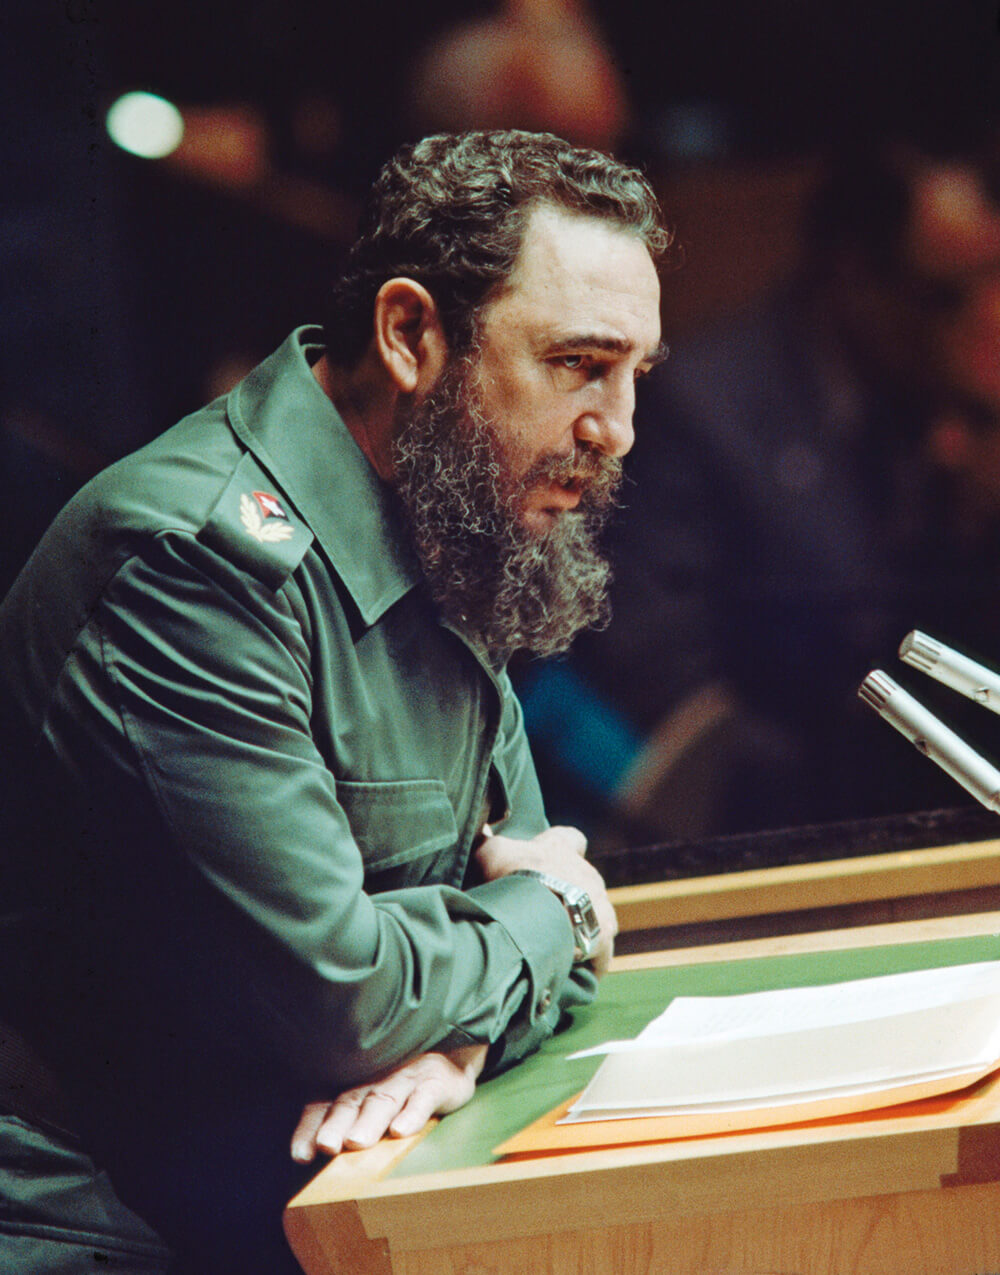 Wearing his iconic army green uniform, Fidel Castro addresses the United Nations on 12 October 1979. Photo Yutaka Nagata.